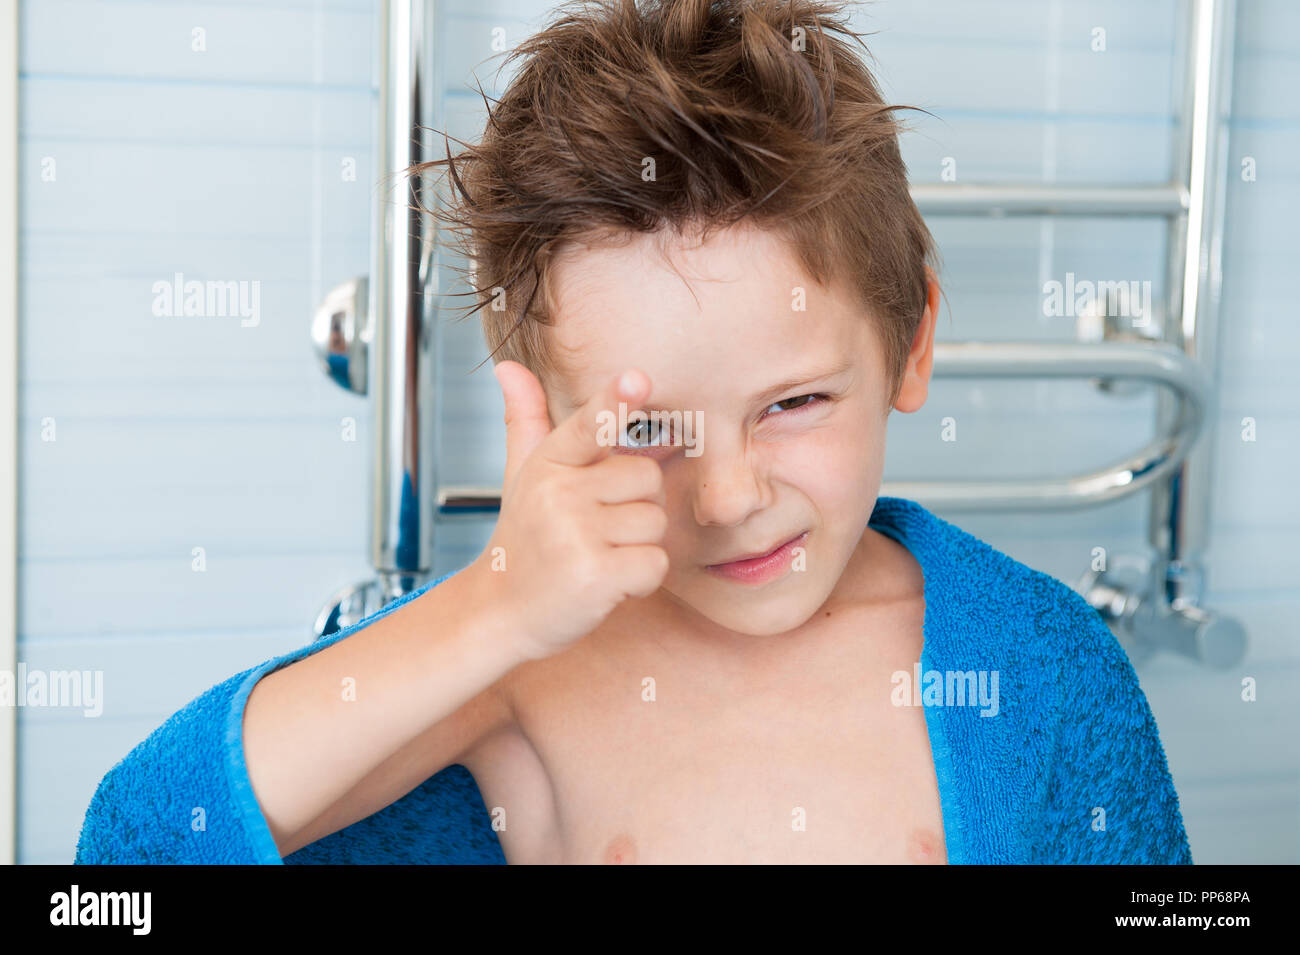 cute healthy little caucasian boy winking with blue towel in bathroom Stock Photo